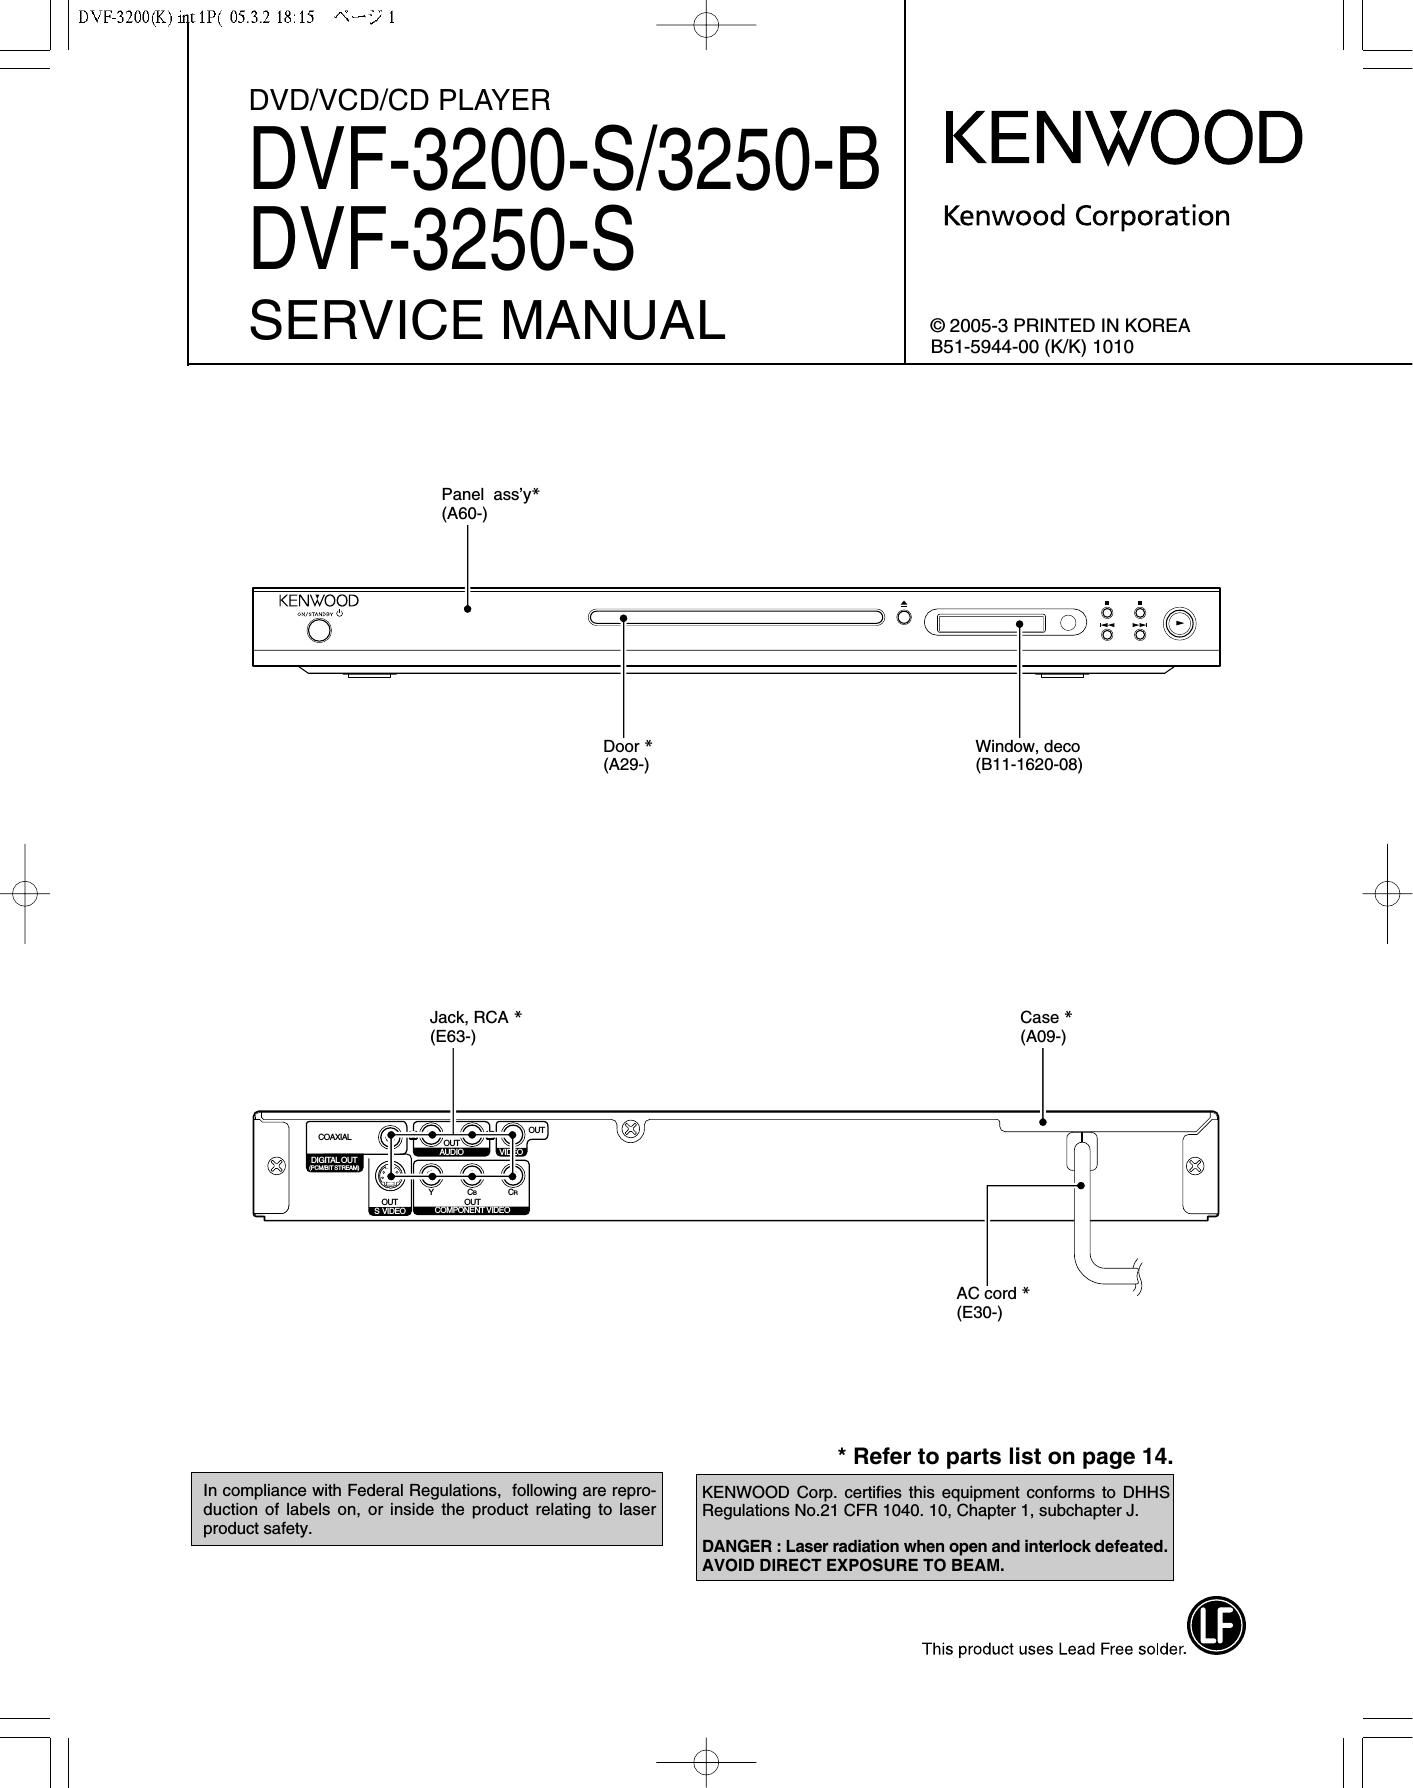 Kenwood DVF 3250 S Service Manual